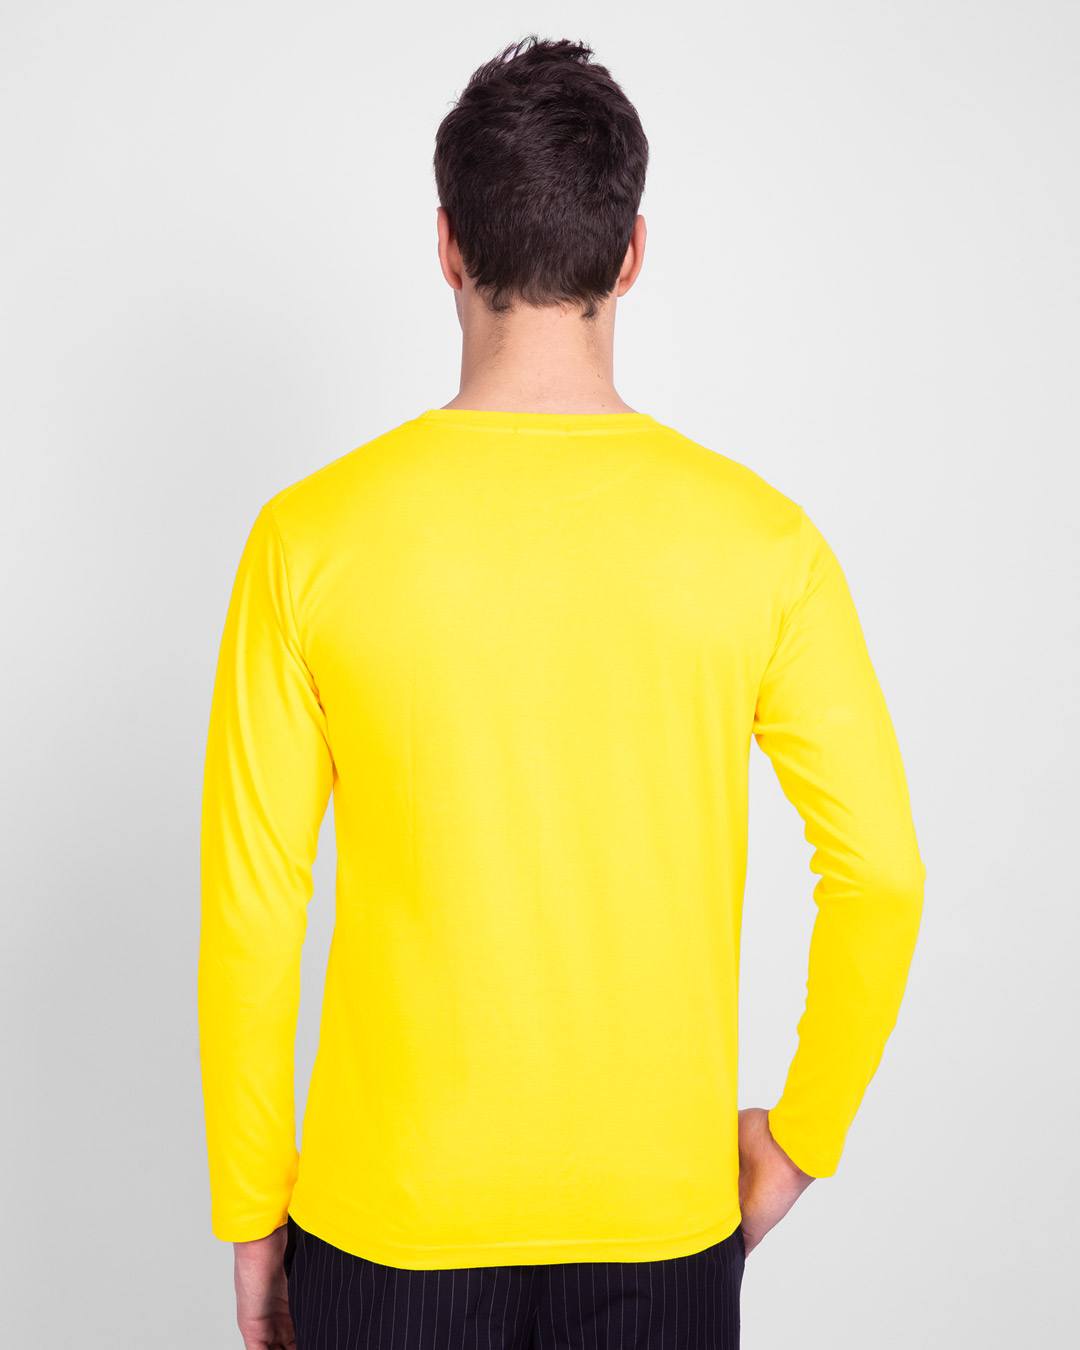 Shop Like My Music Loud Full Sleeve T-Shirt Pineapple Yellow -Back